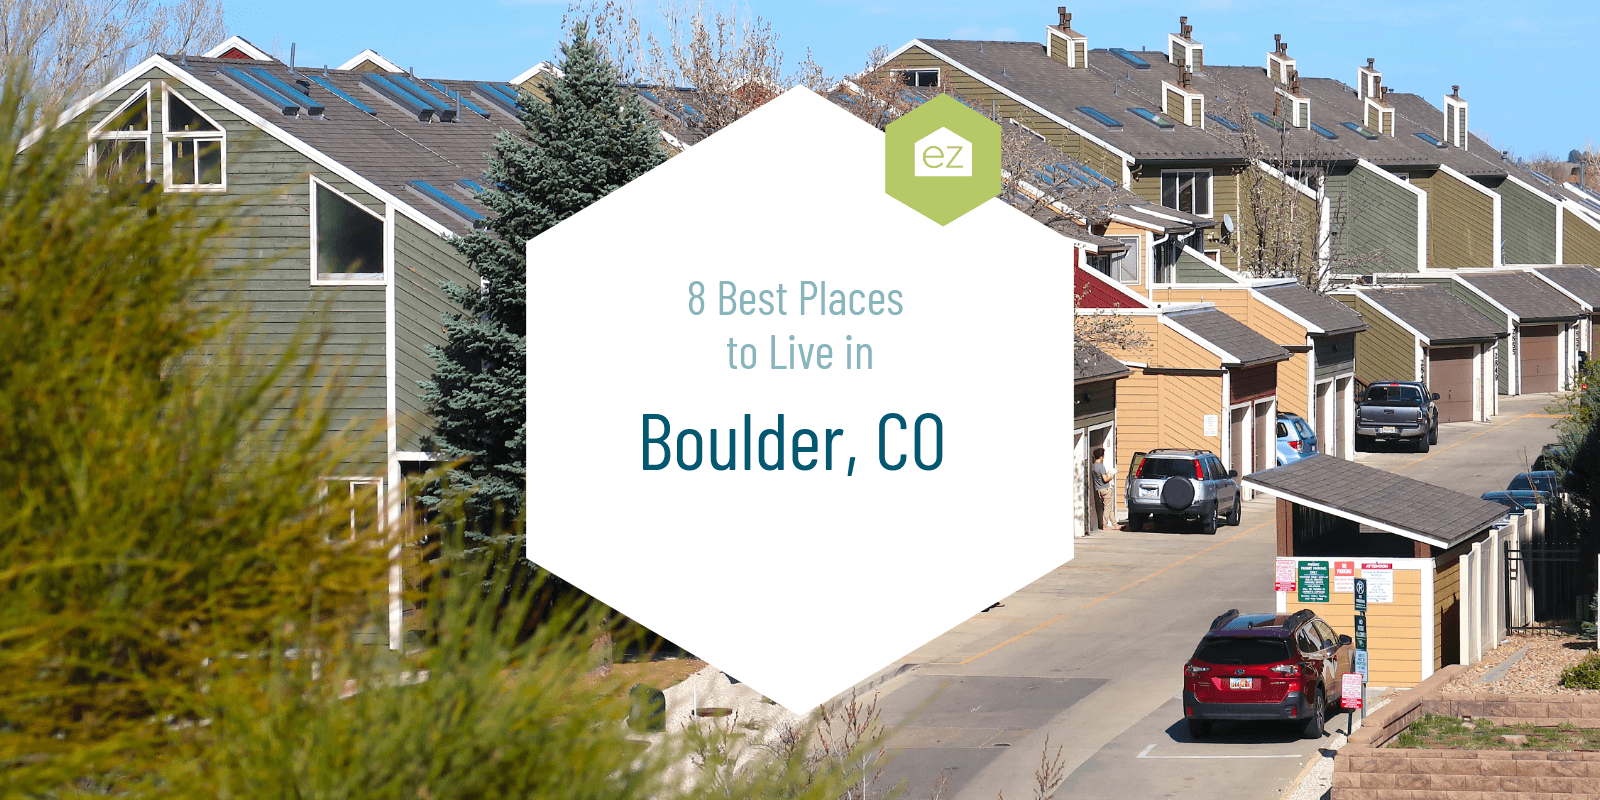 Boulder CO housing community